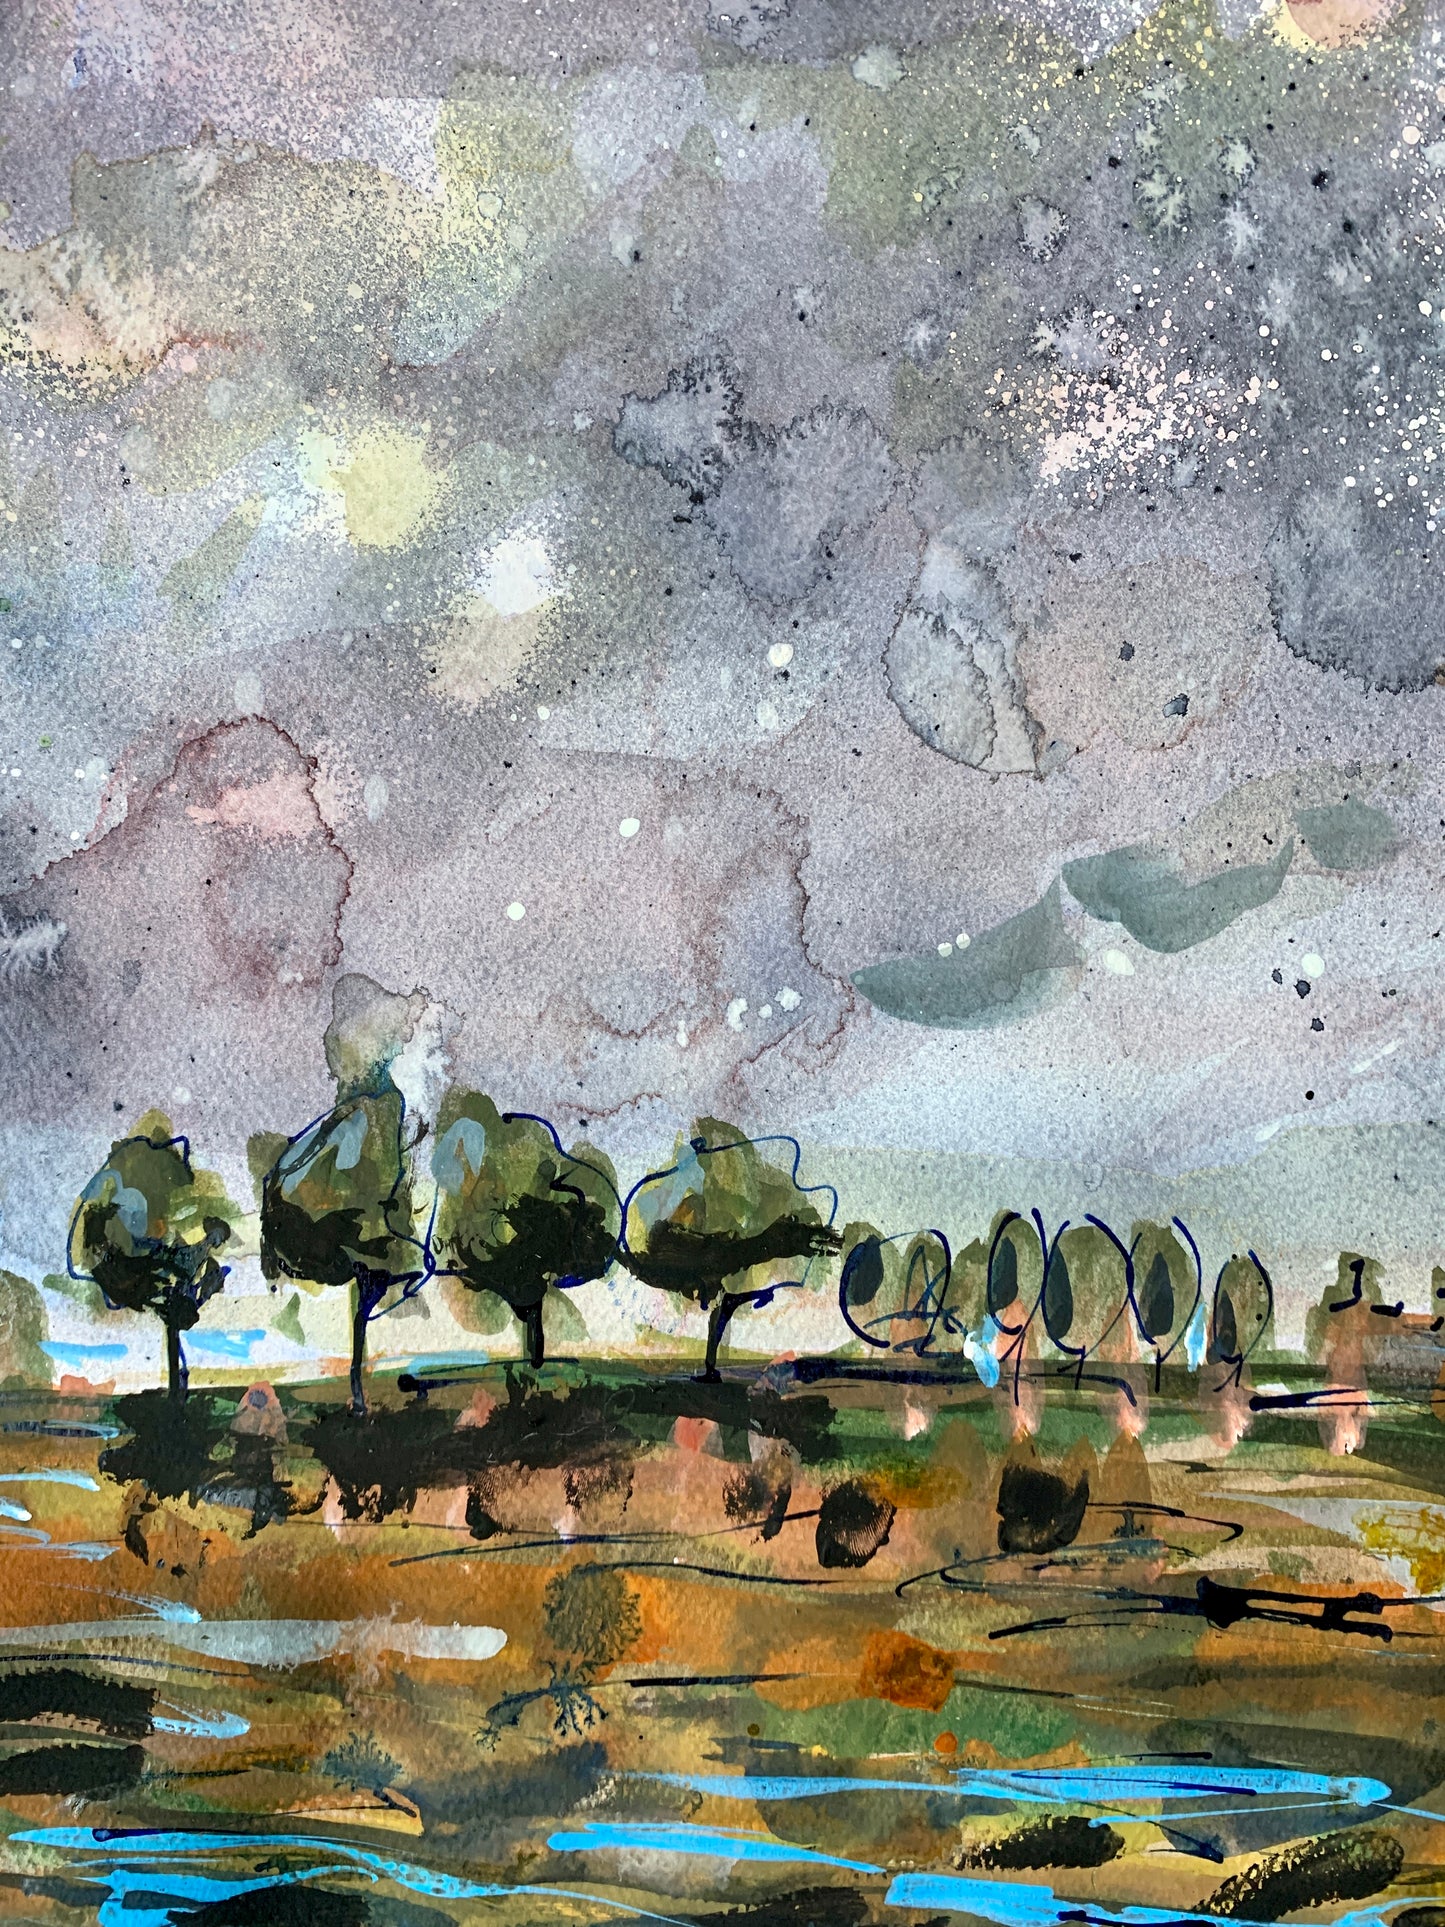 Impressionist tree-scape influenced by Gustav Klimt